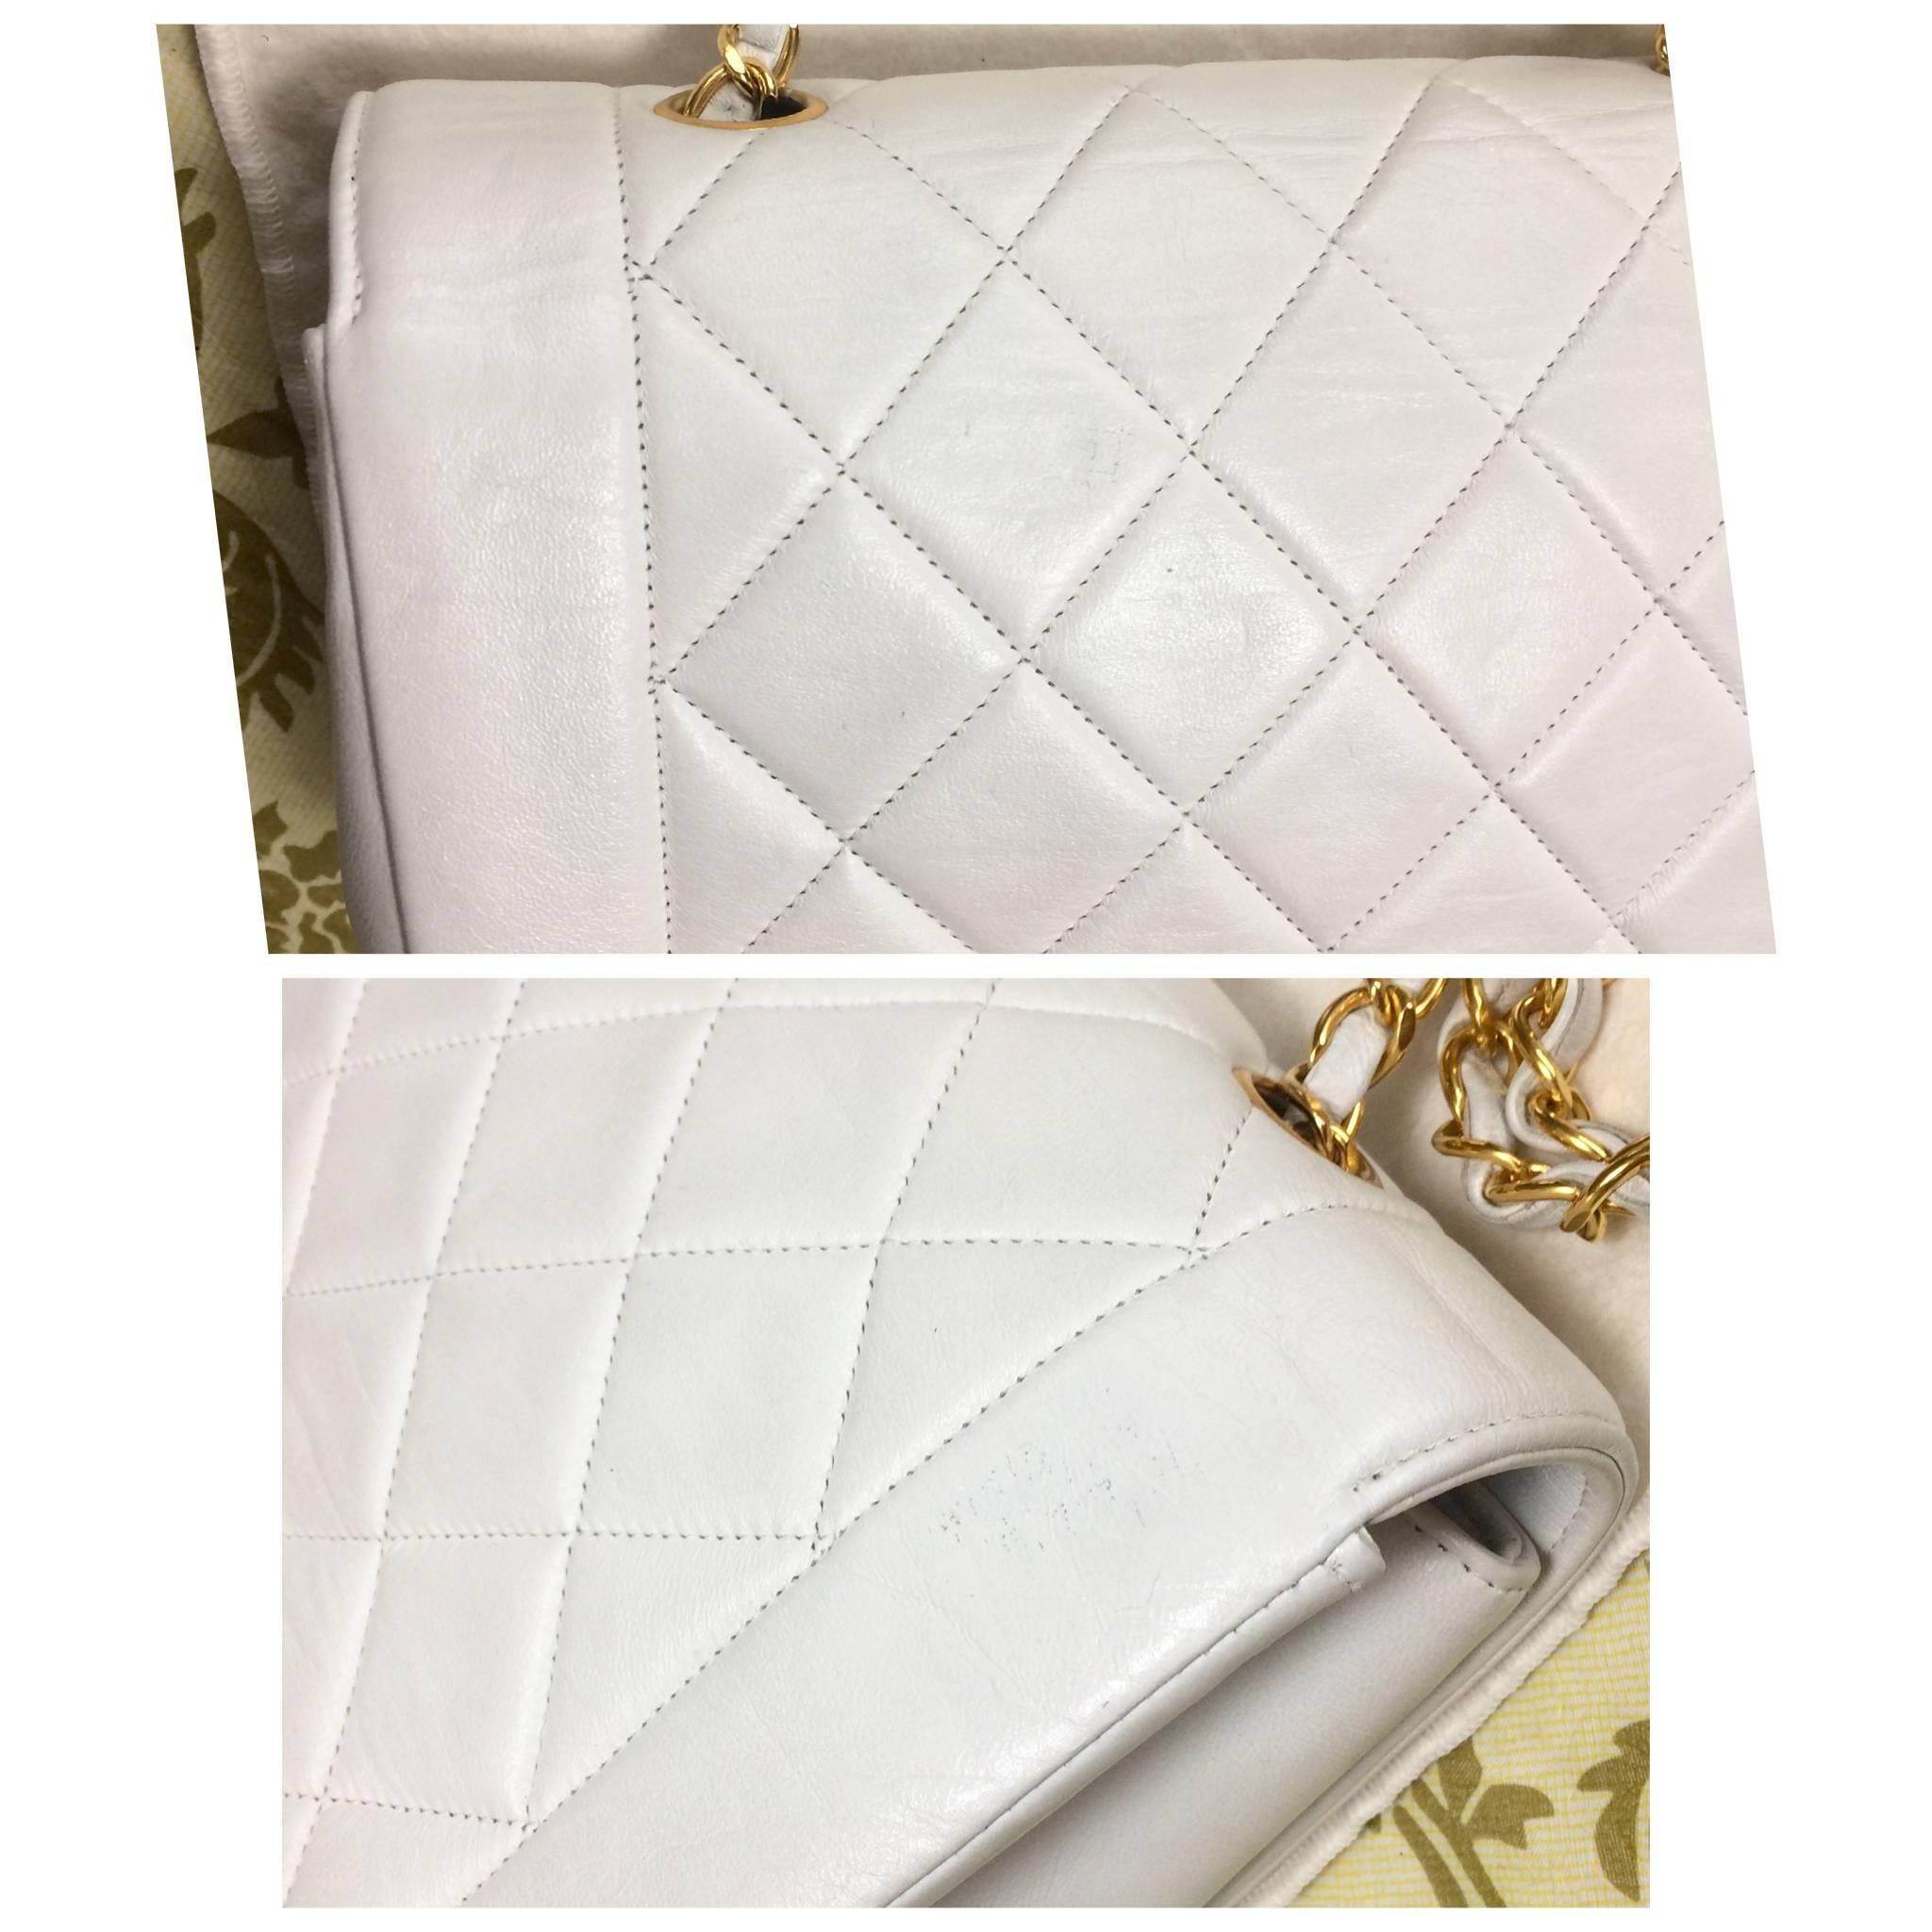 Women's Vintage Chanel classic 2.55 white color lamb leather shoulder bag with gold CC.